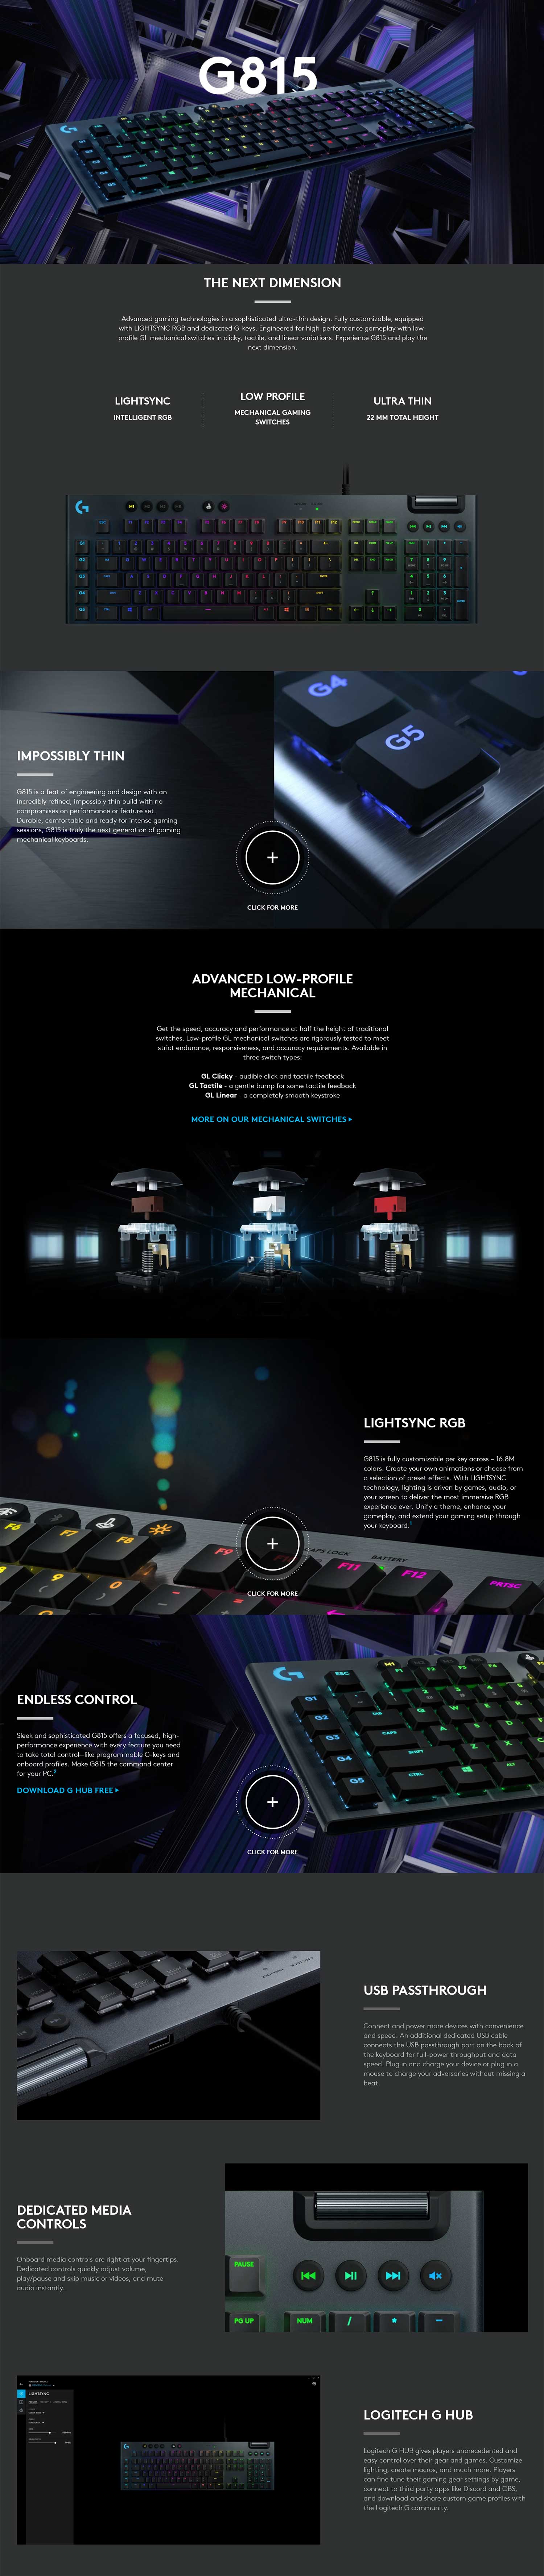 Logitech G815 Lightsync RGB Mechanical Gaming Keyboard - Linear Switch 920-009223 Details